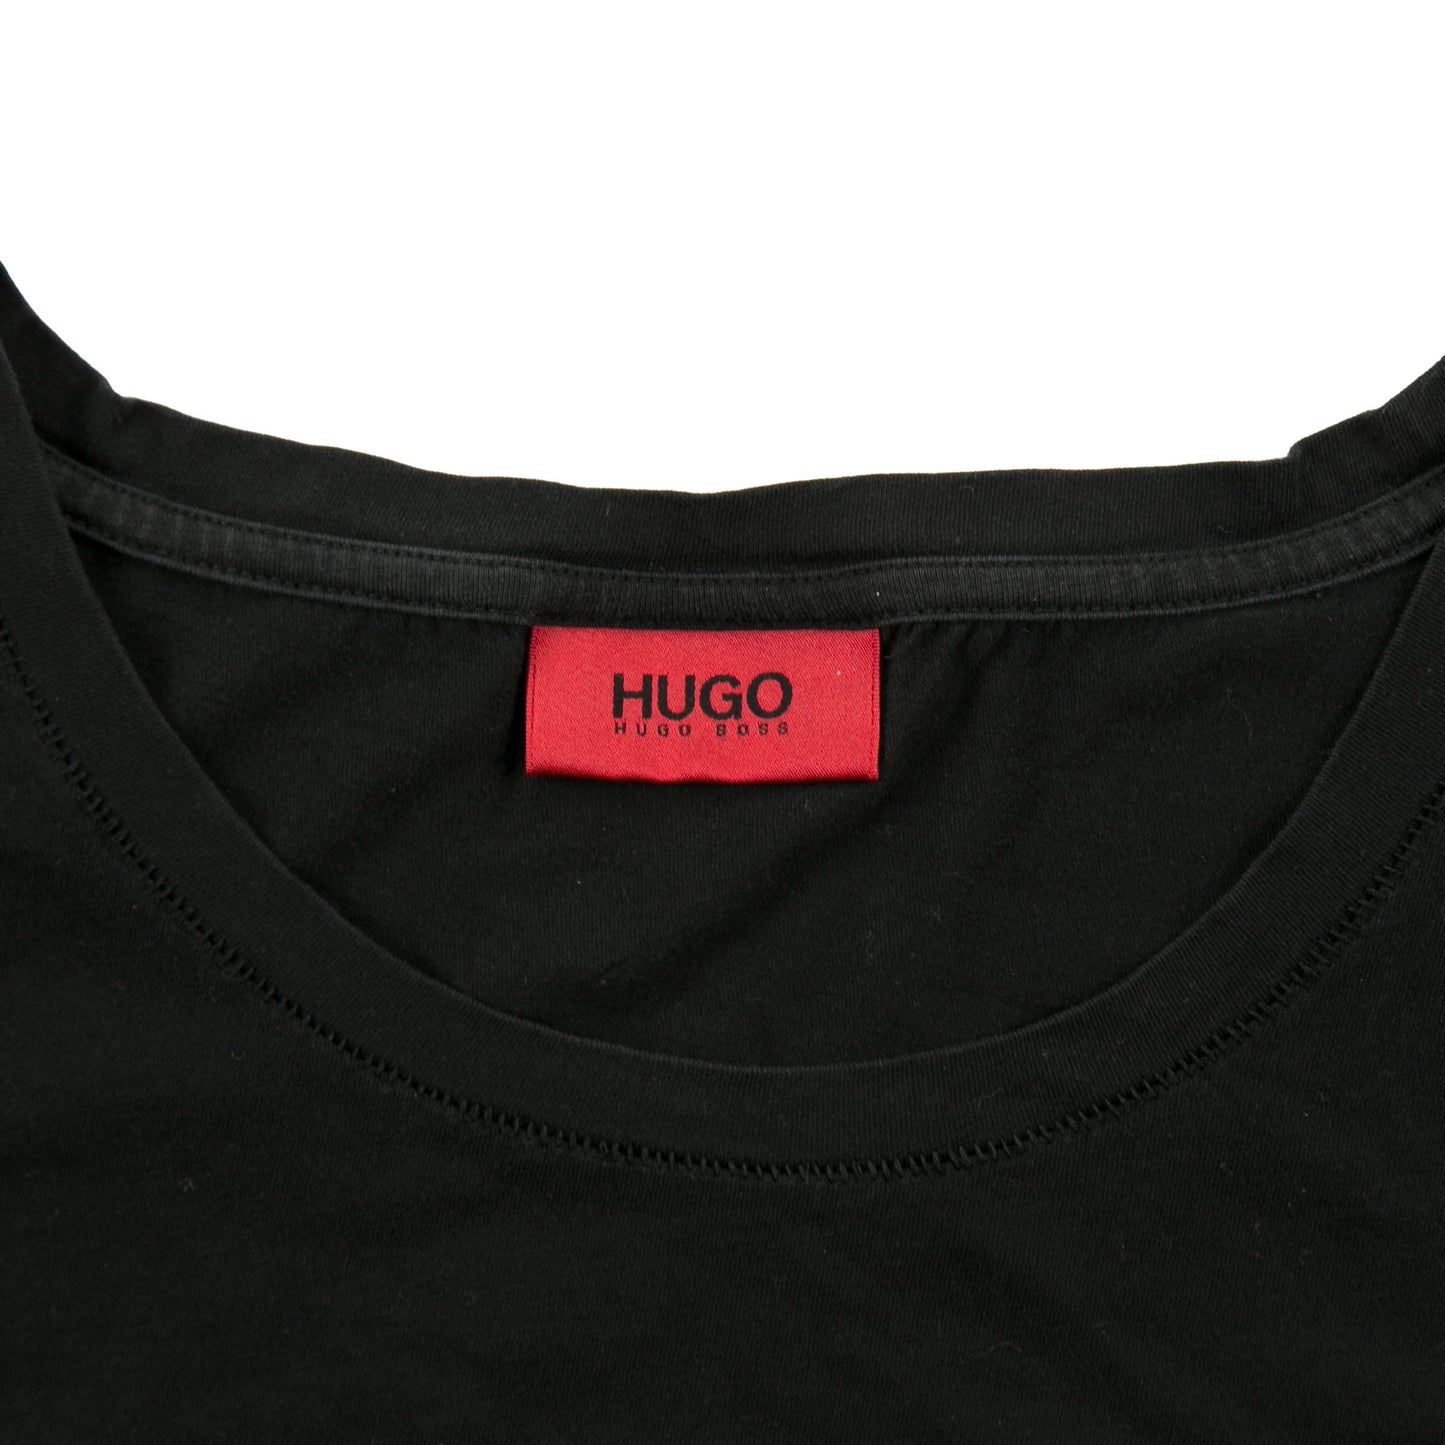 Hugo Boss - XL/TG